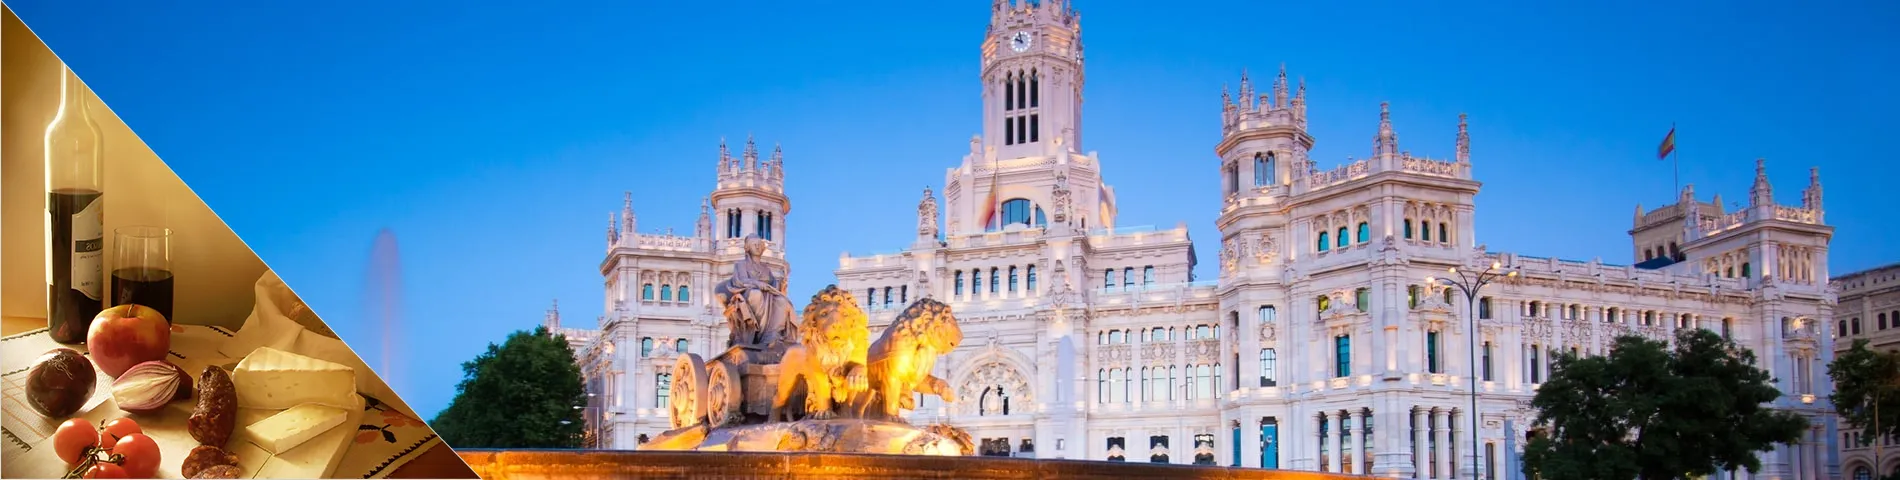 Madrid - Spanisch & Kultur